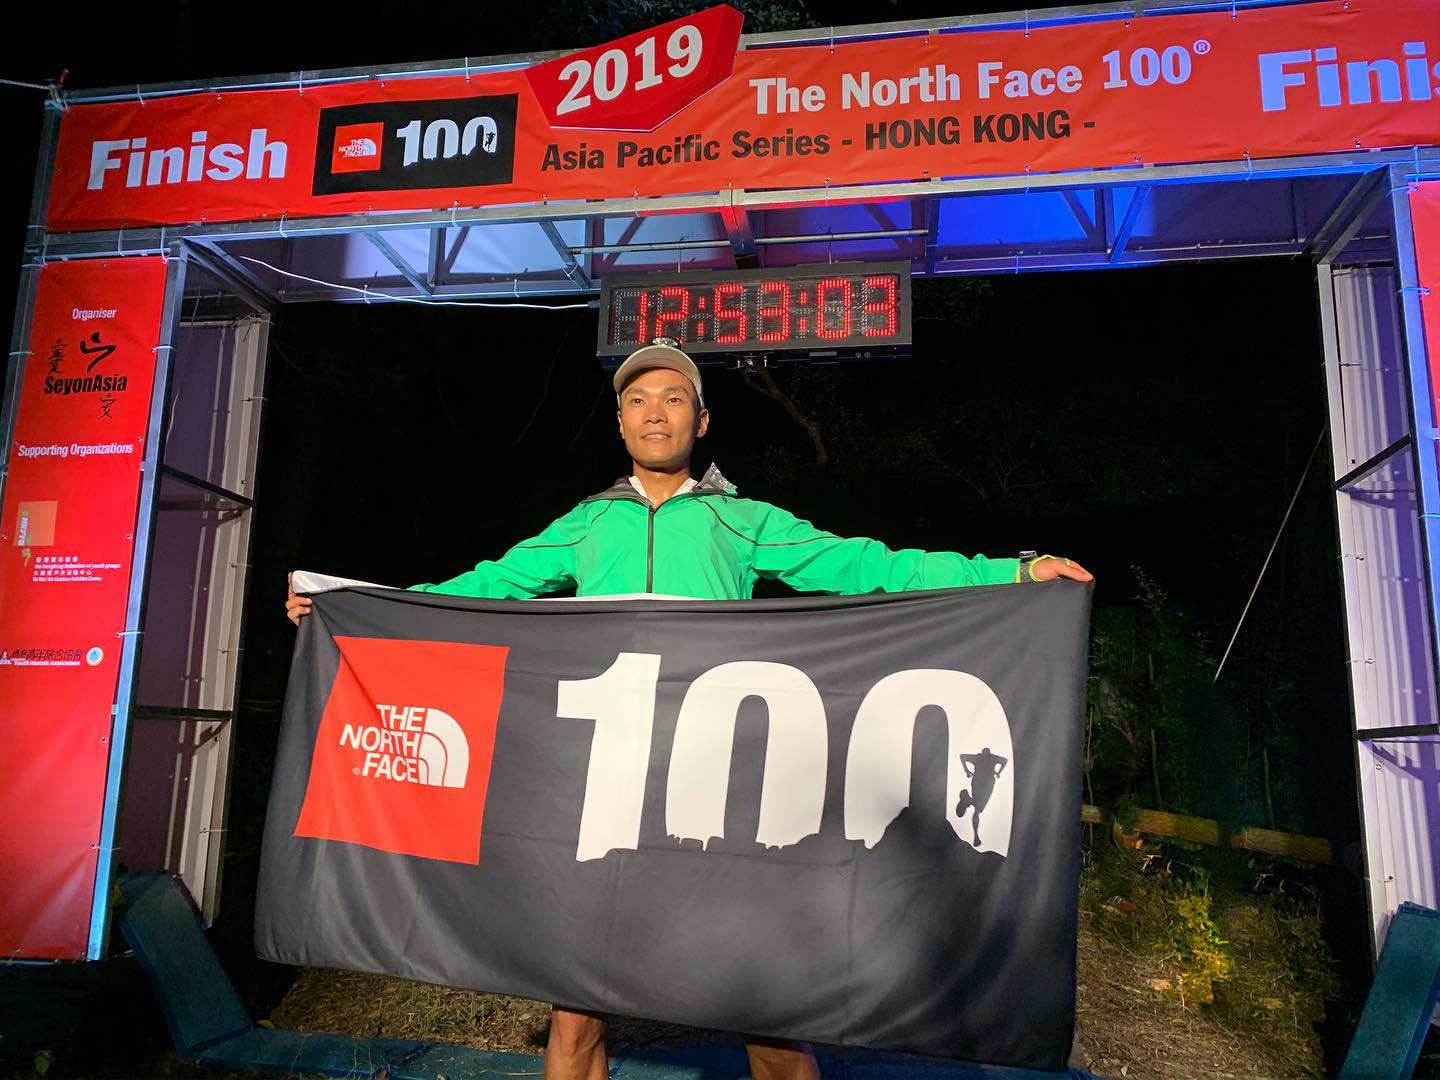 【FINISH終點直擊】 恭喜The North Face 運動員 #黄浩聰 ，成為100公里組別冠軍！(Finish Time: 12:49:57)